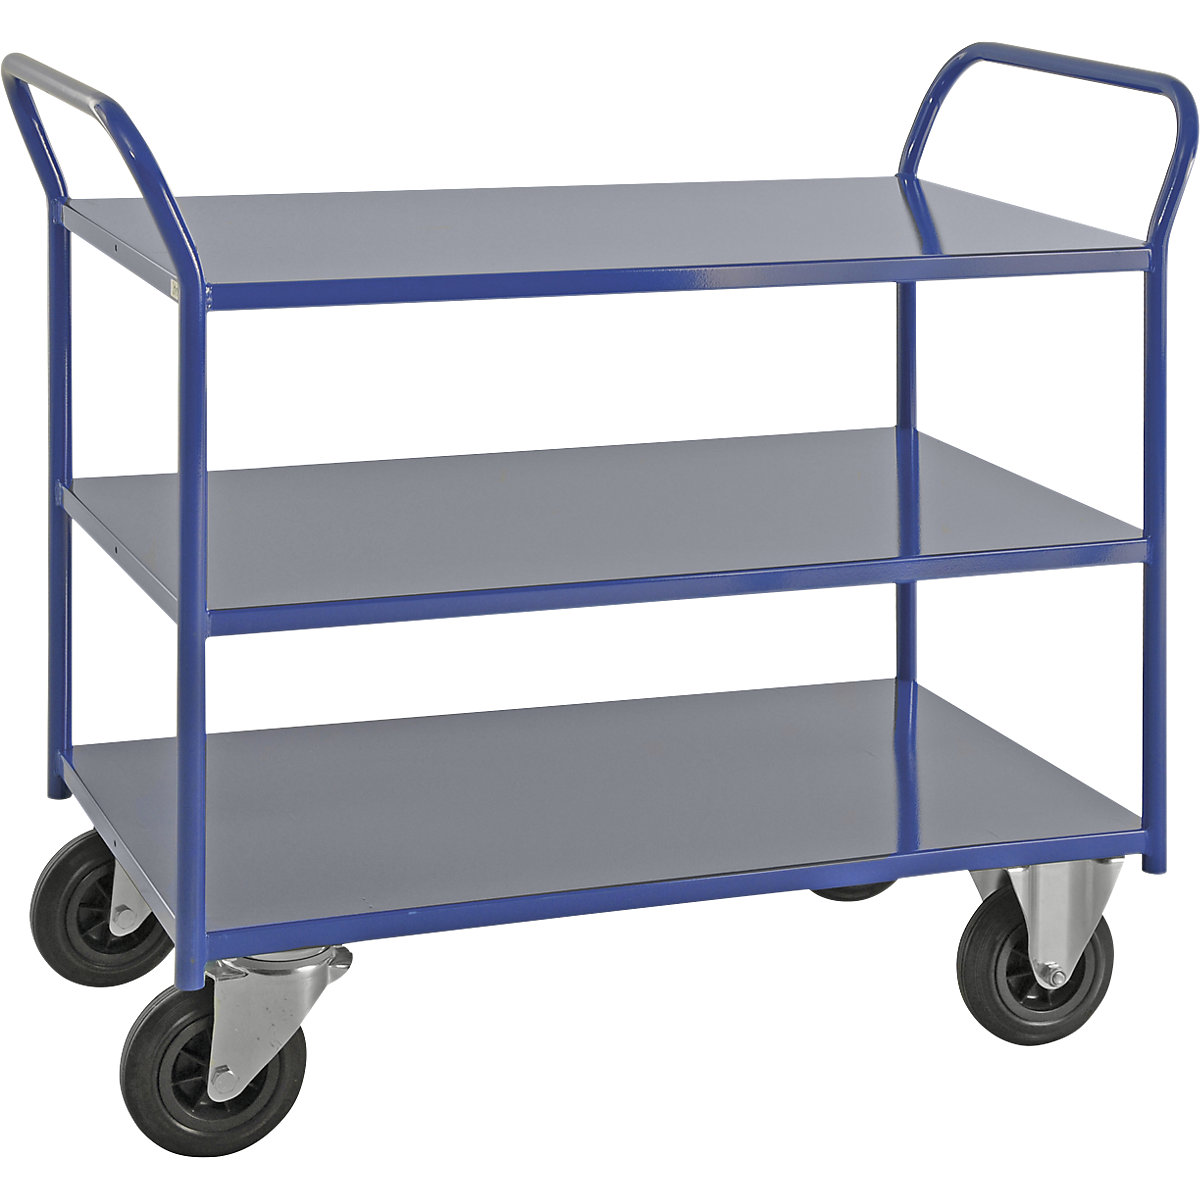 KM41 table trolley – Kongamek, 3 shelves, LxWxH 1070 x 550 x 975 mm, blue, 2 swivel castors with stops, 2 fixed castors, 5+ items-8